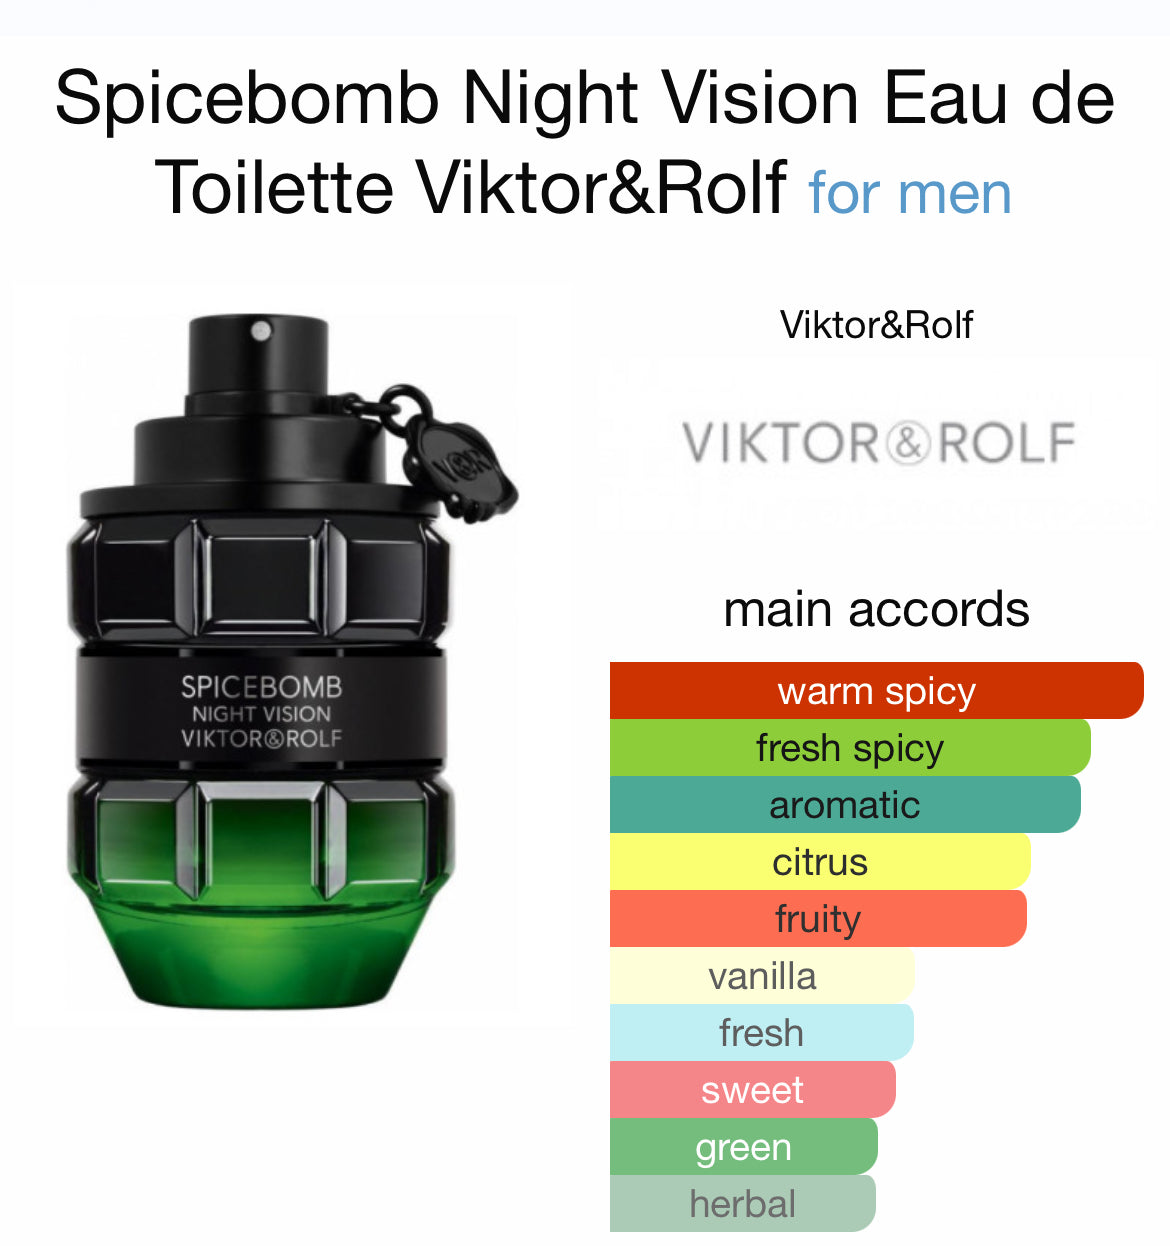 Spicebomb nightvision